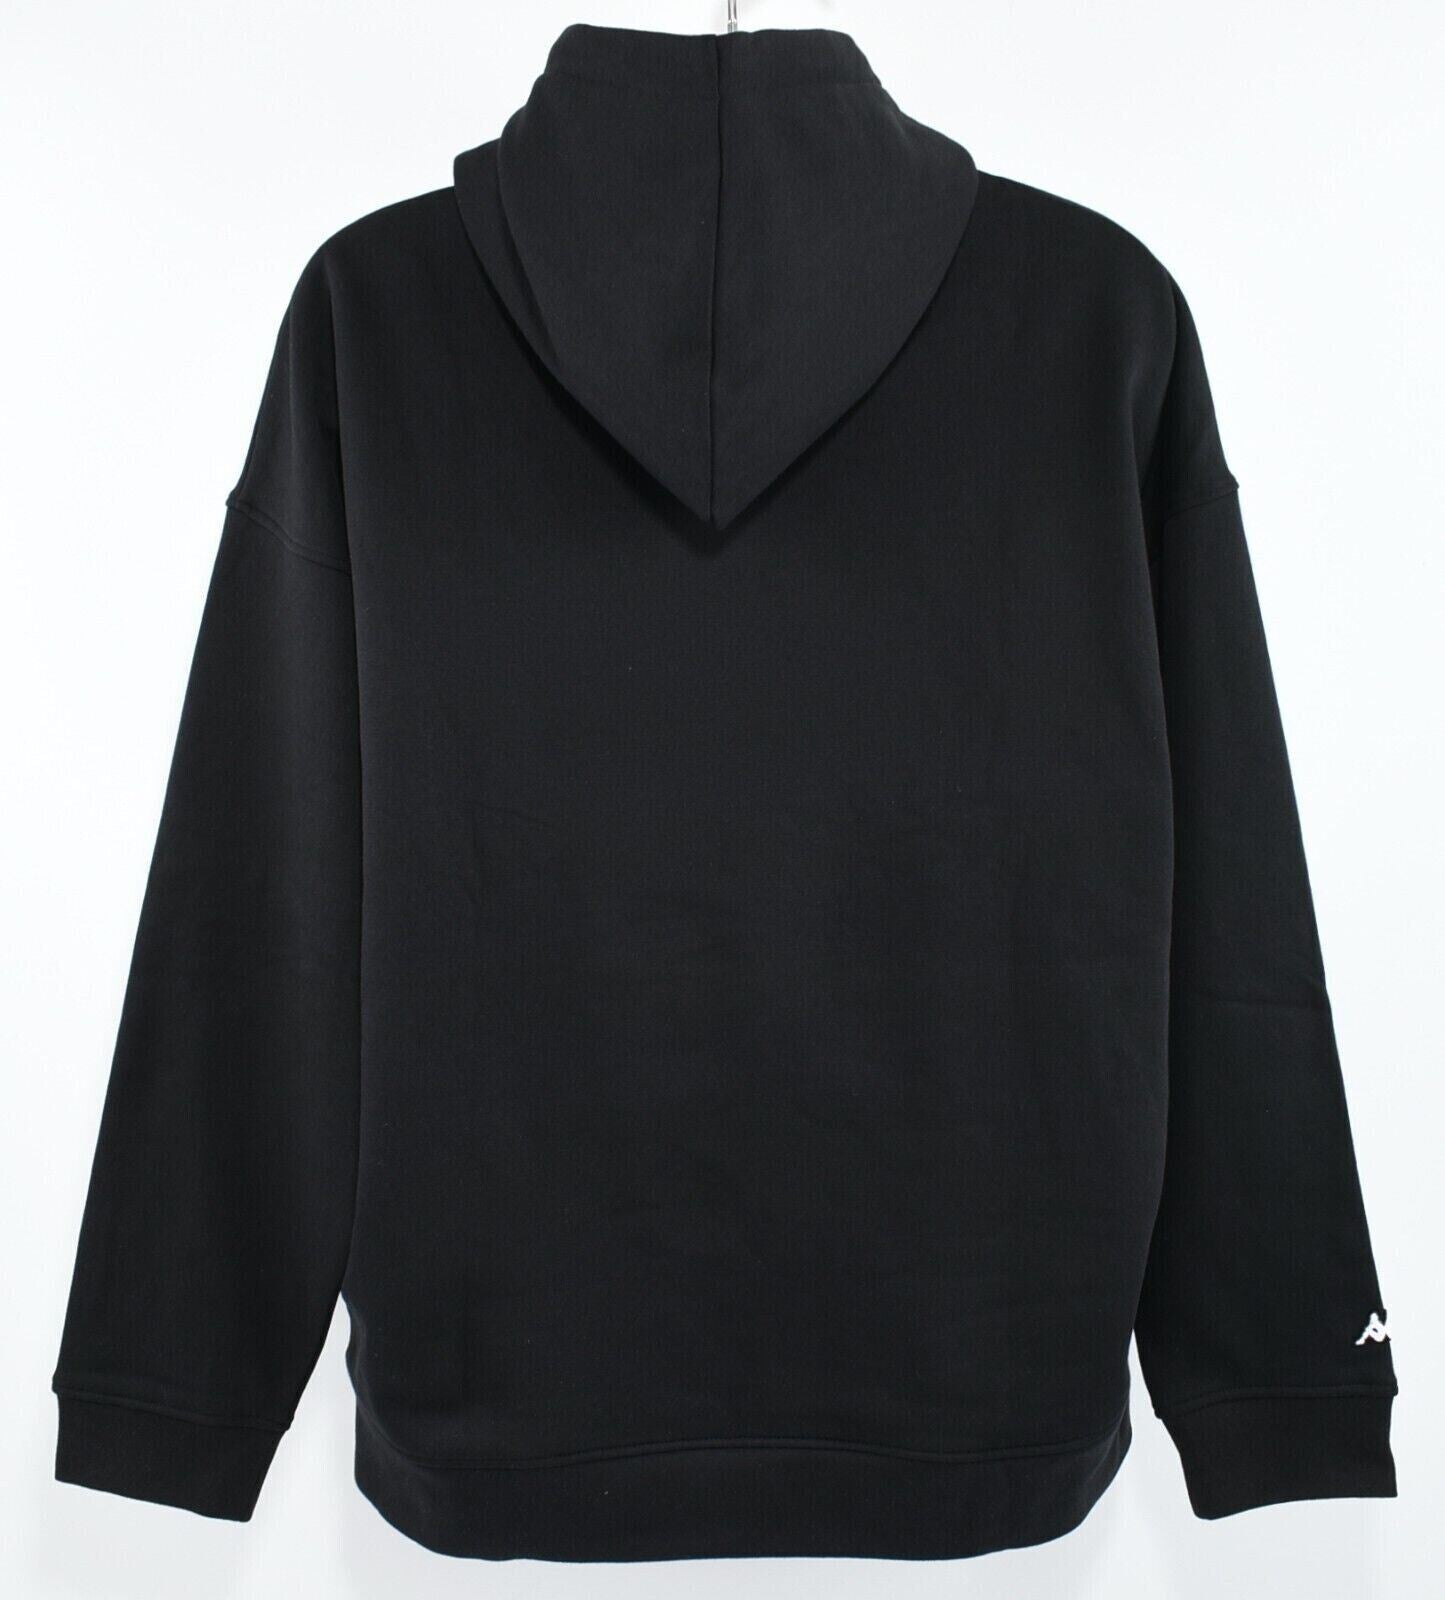 KAPPA Men's Oversized Hooded Sweatshirt, Hoodie, Black with White Logo, size L